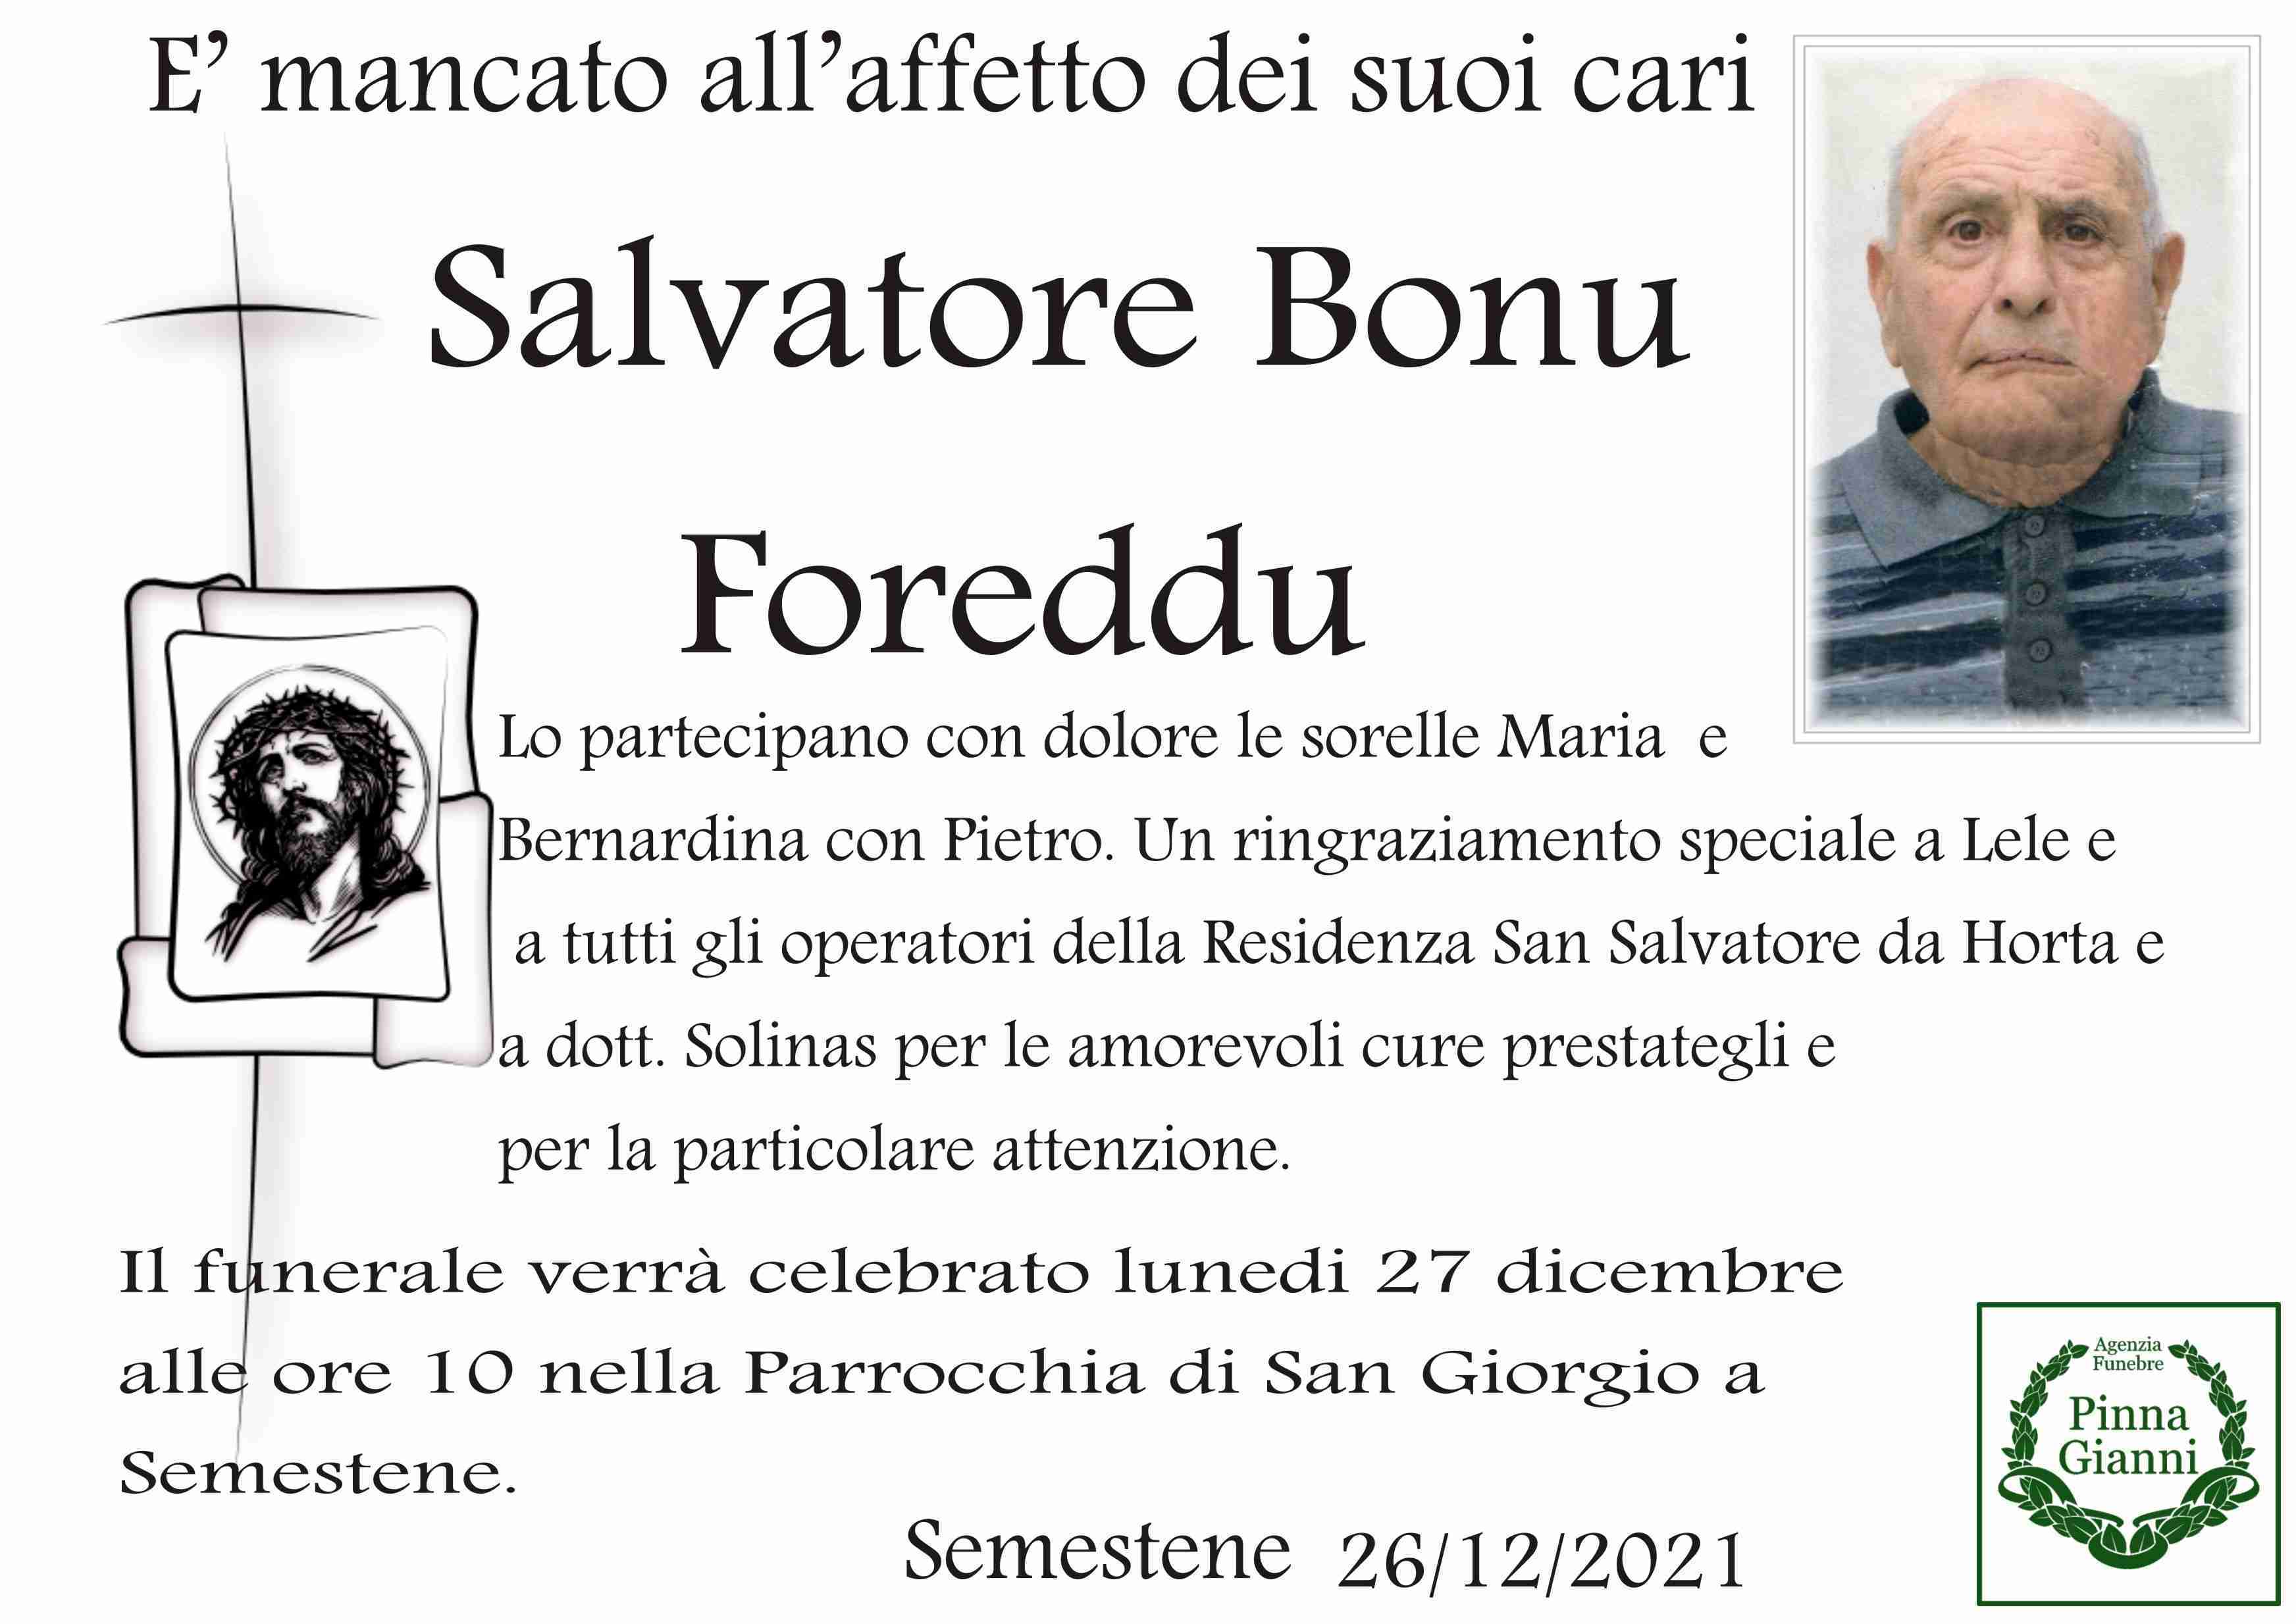 Salvatore Bonu